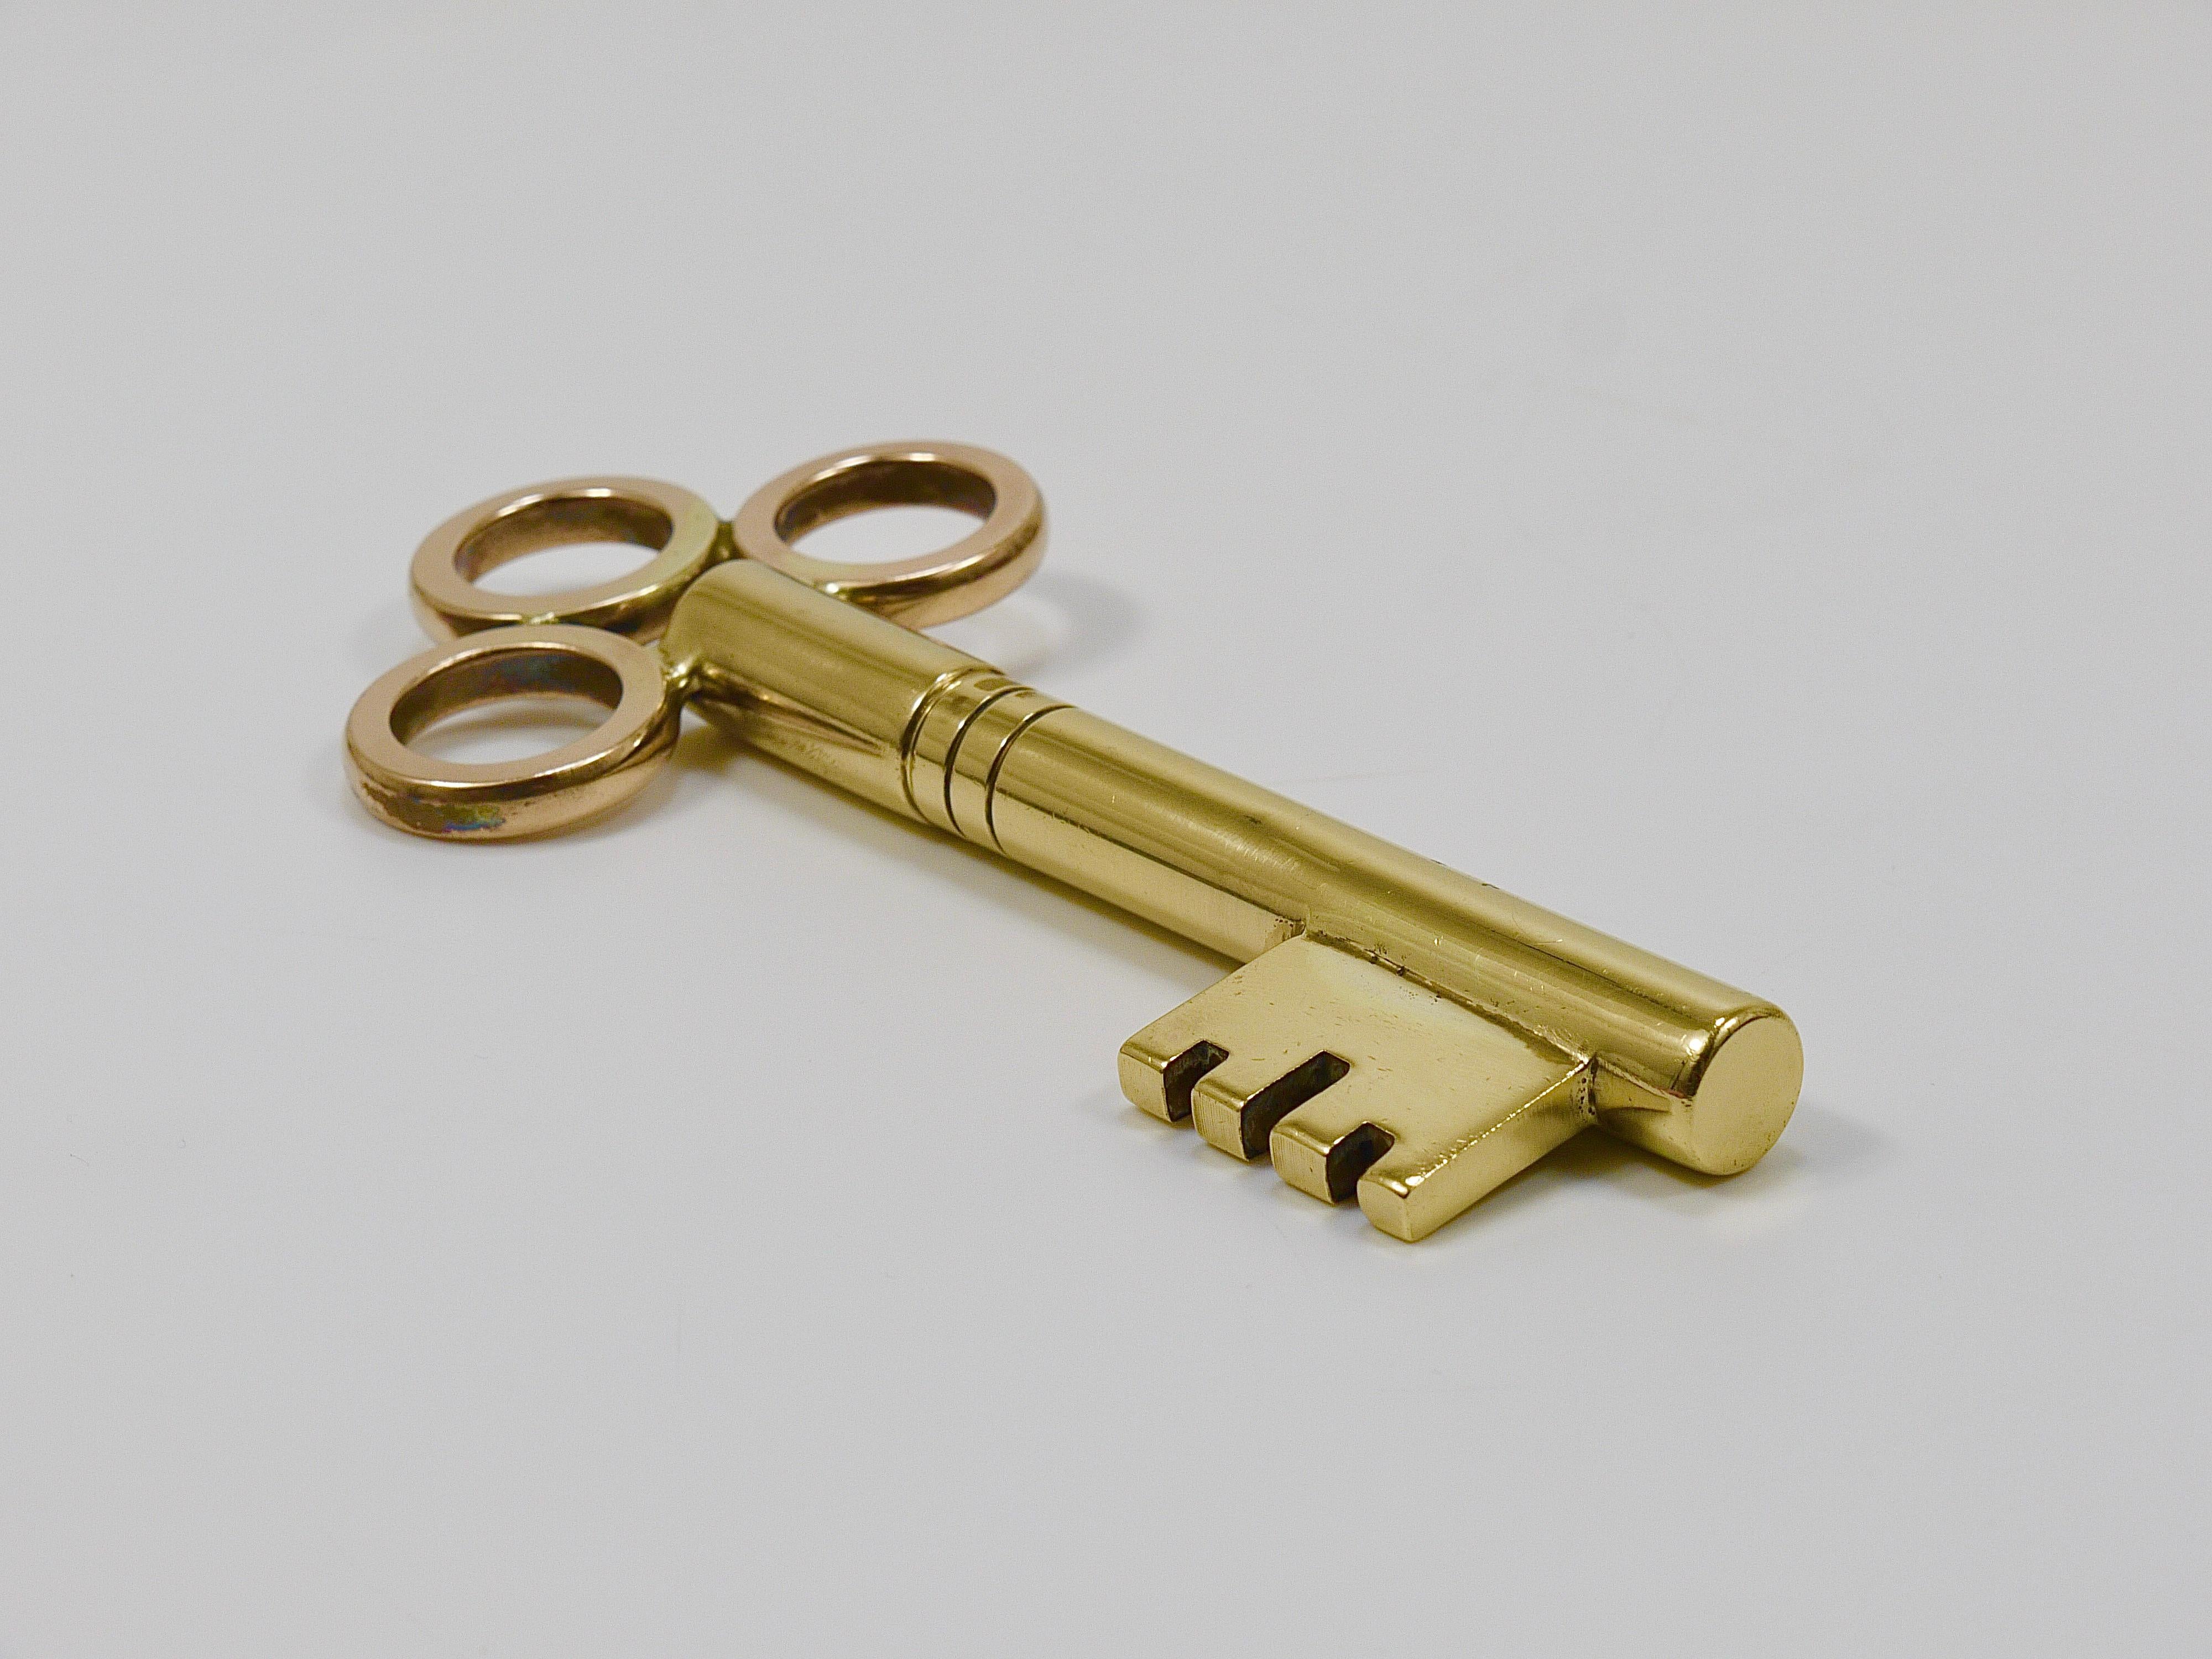 Large Carl Aubock Brass Key Corkscrew Bottle Opener Paperweight, Austria, 1950s For Sale 8